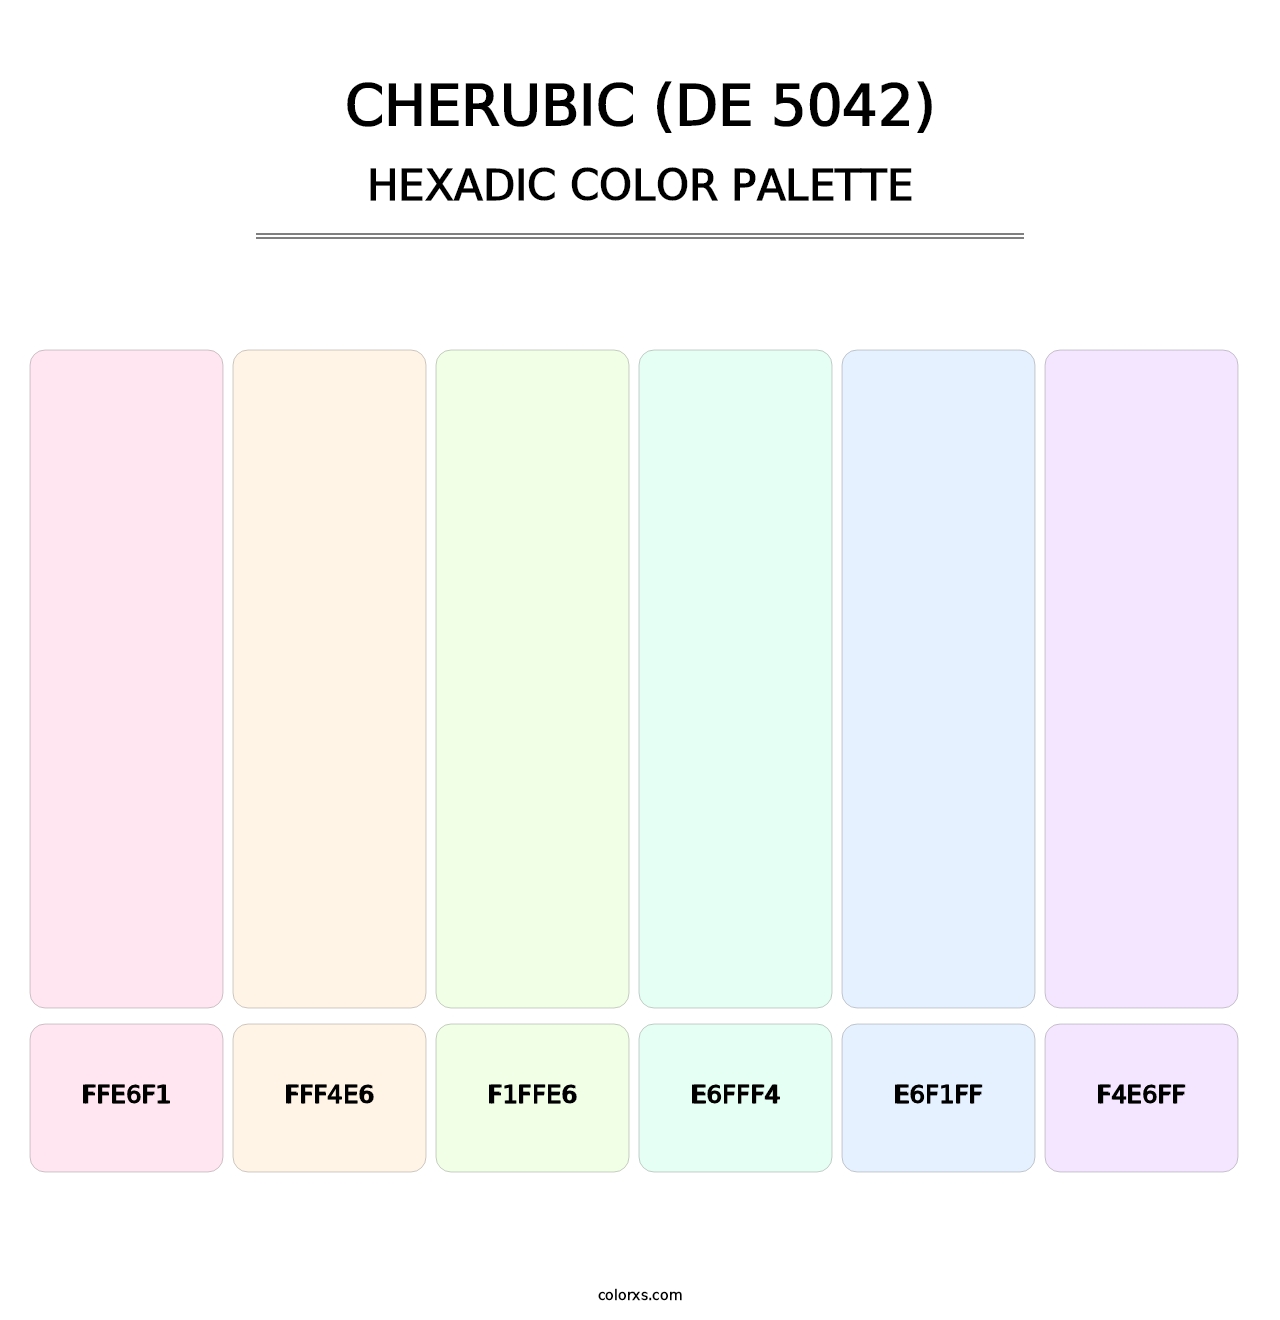 Cherubic (DE 5042) - Hexadic Color Palette